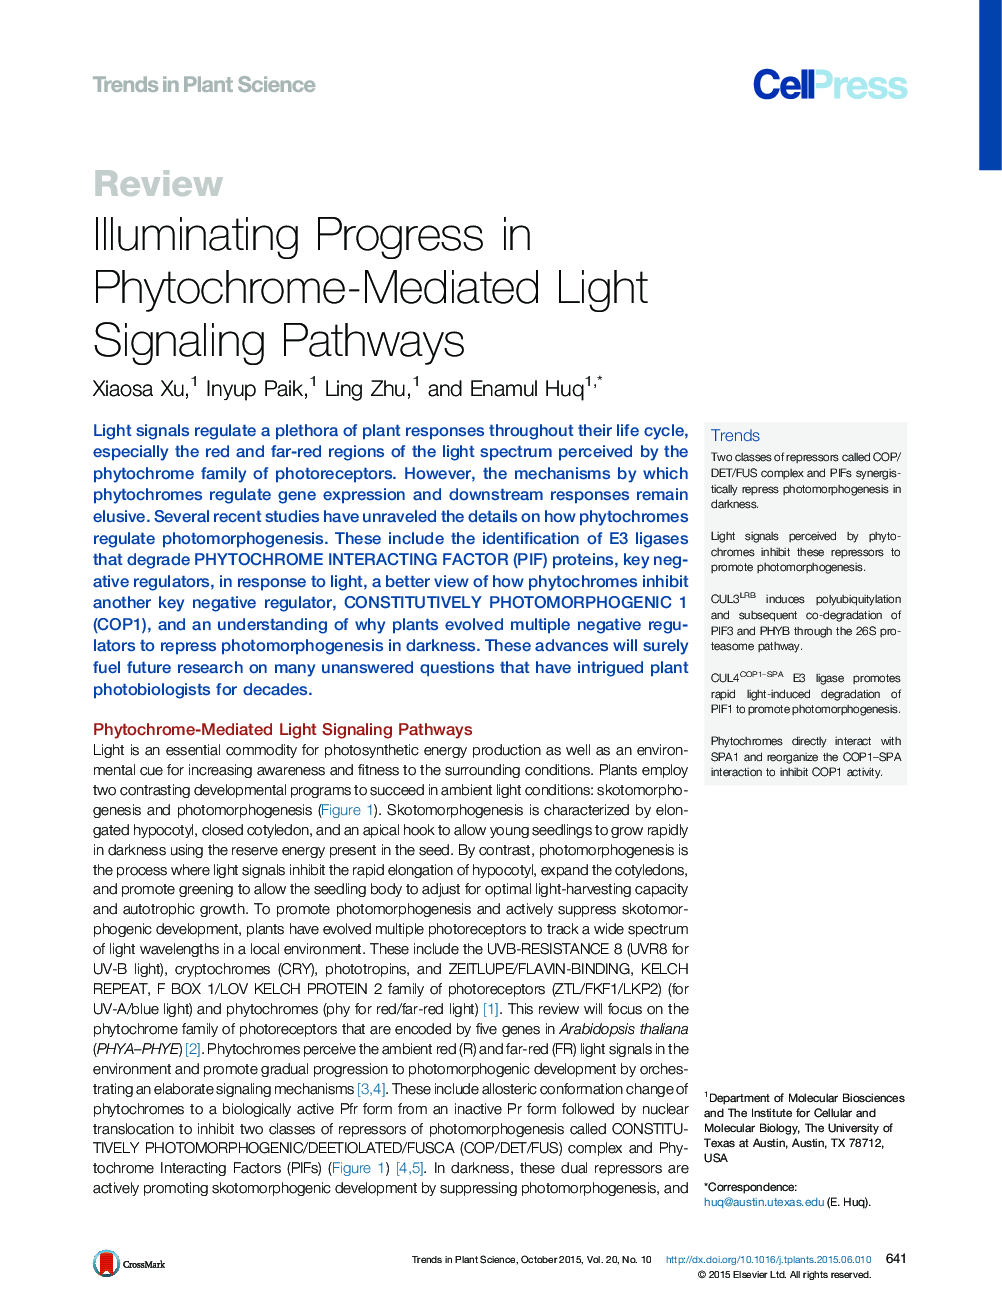 Illuminating Progress in Phytochrome-Mediated Light Signaling Pathways